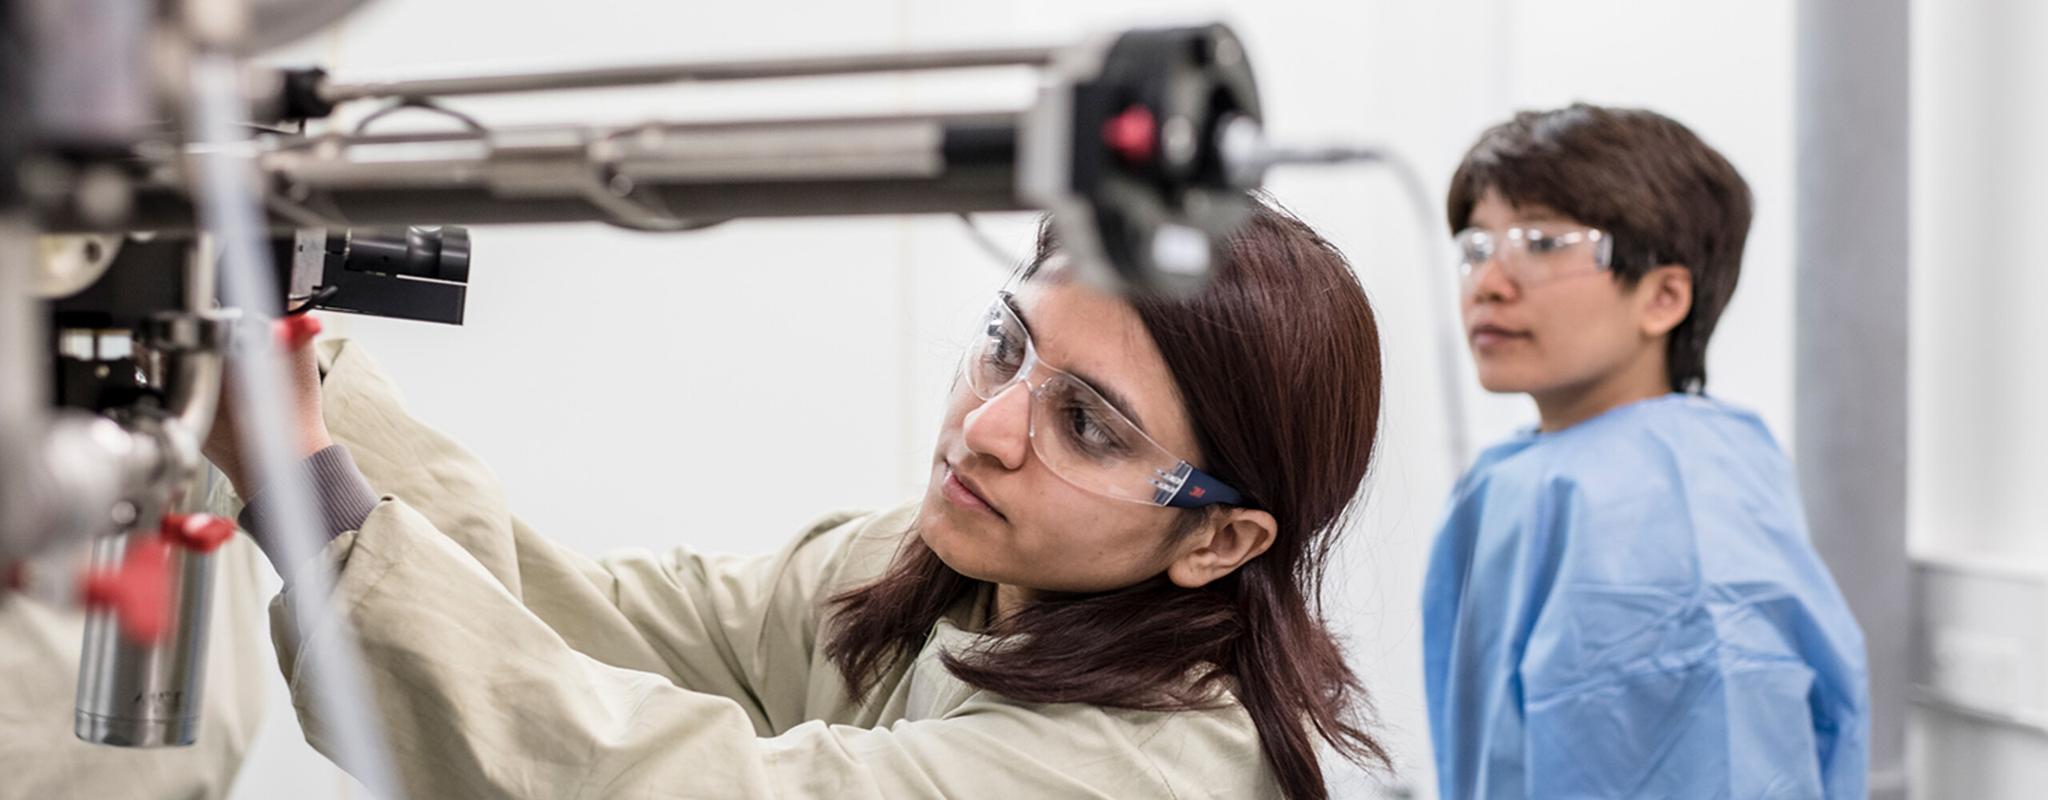 Woman scientist adjusting equipment in lab